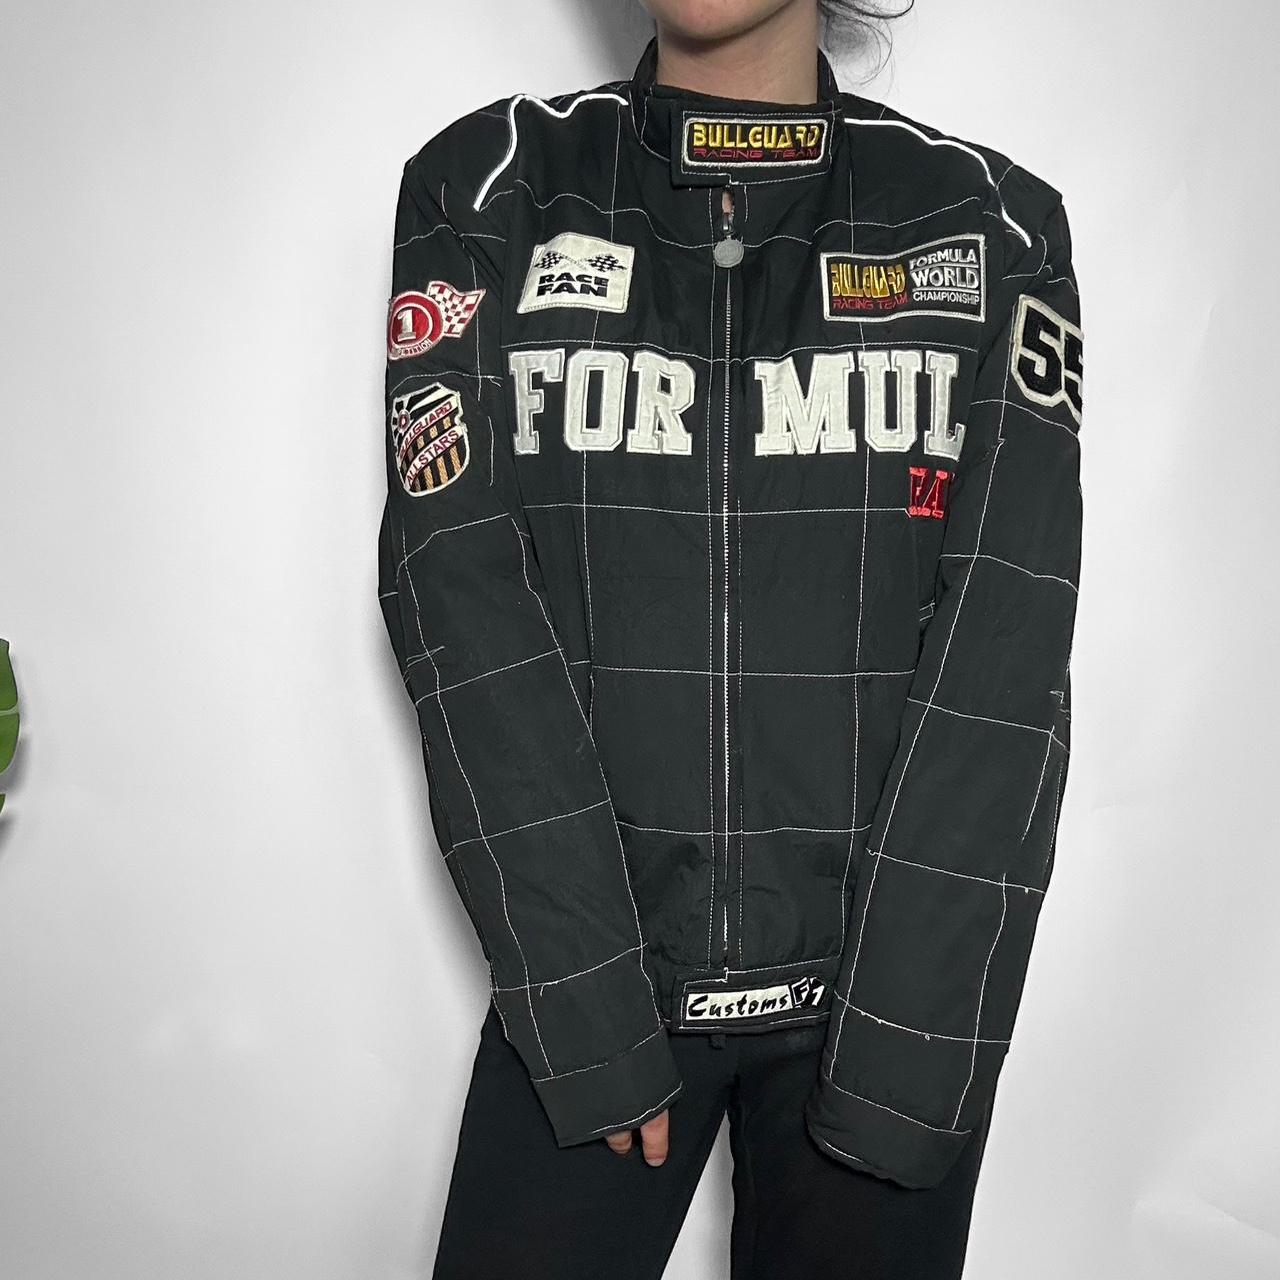 Vintage 90s Formula 1 Bullguard racing jacket